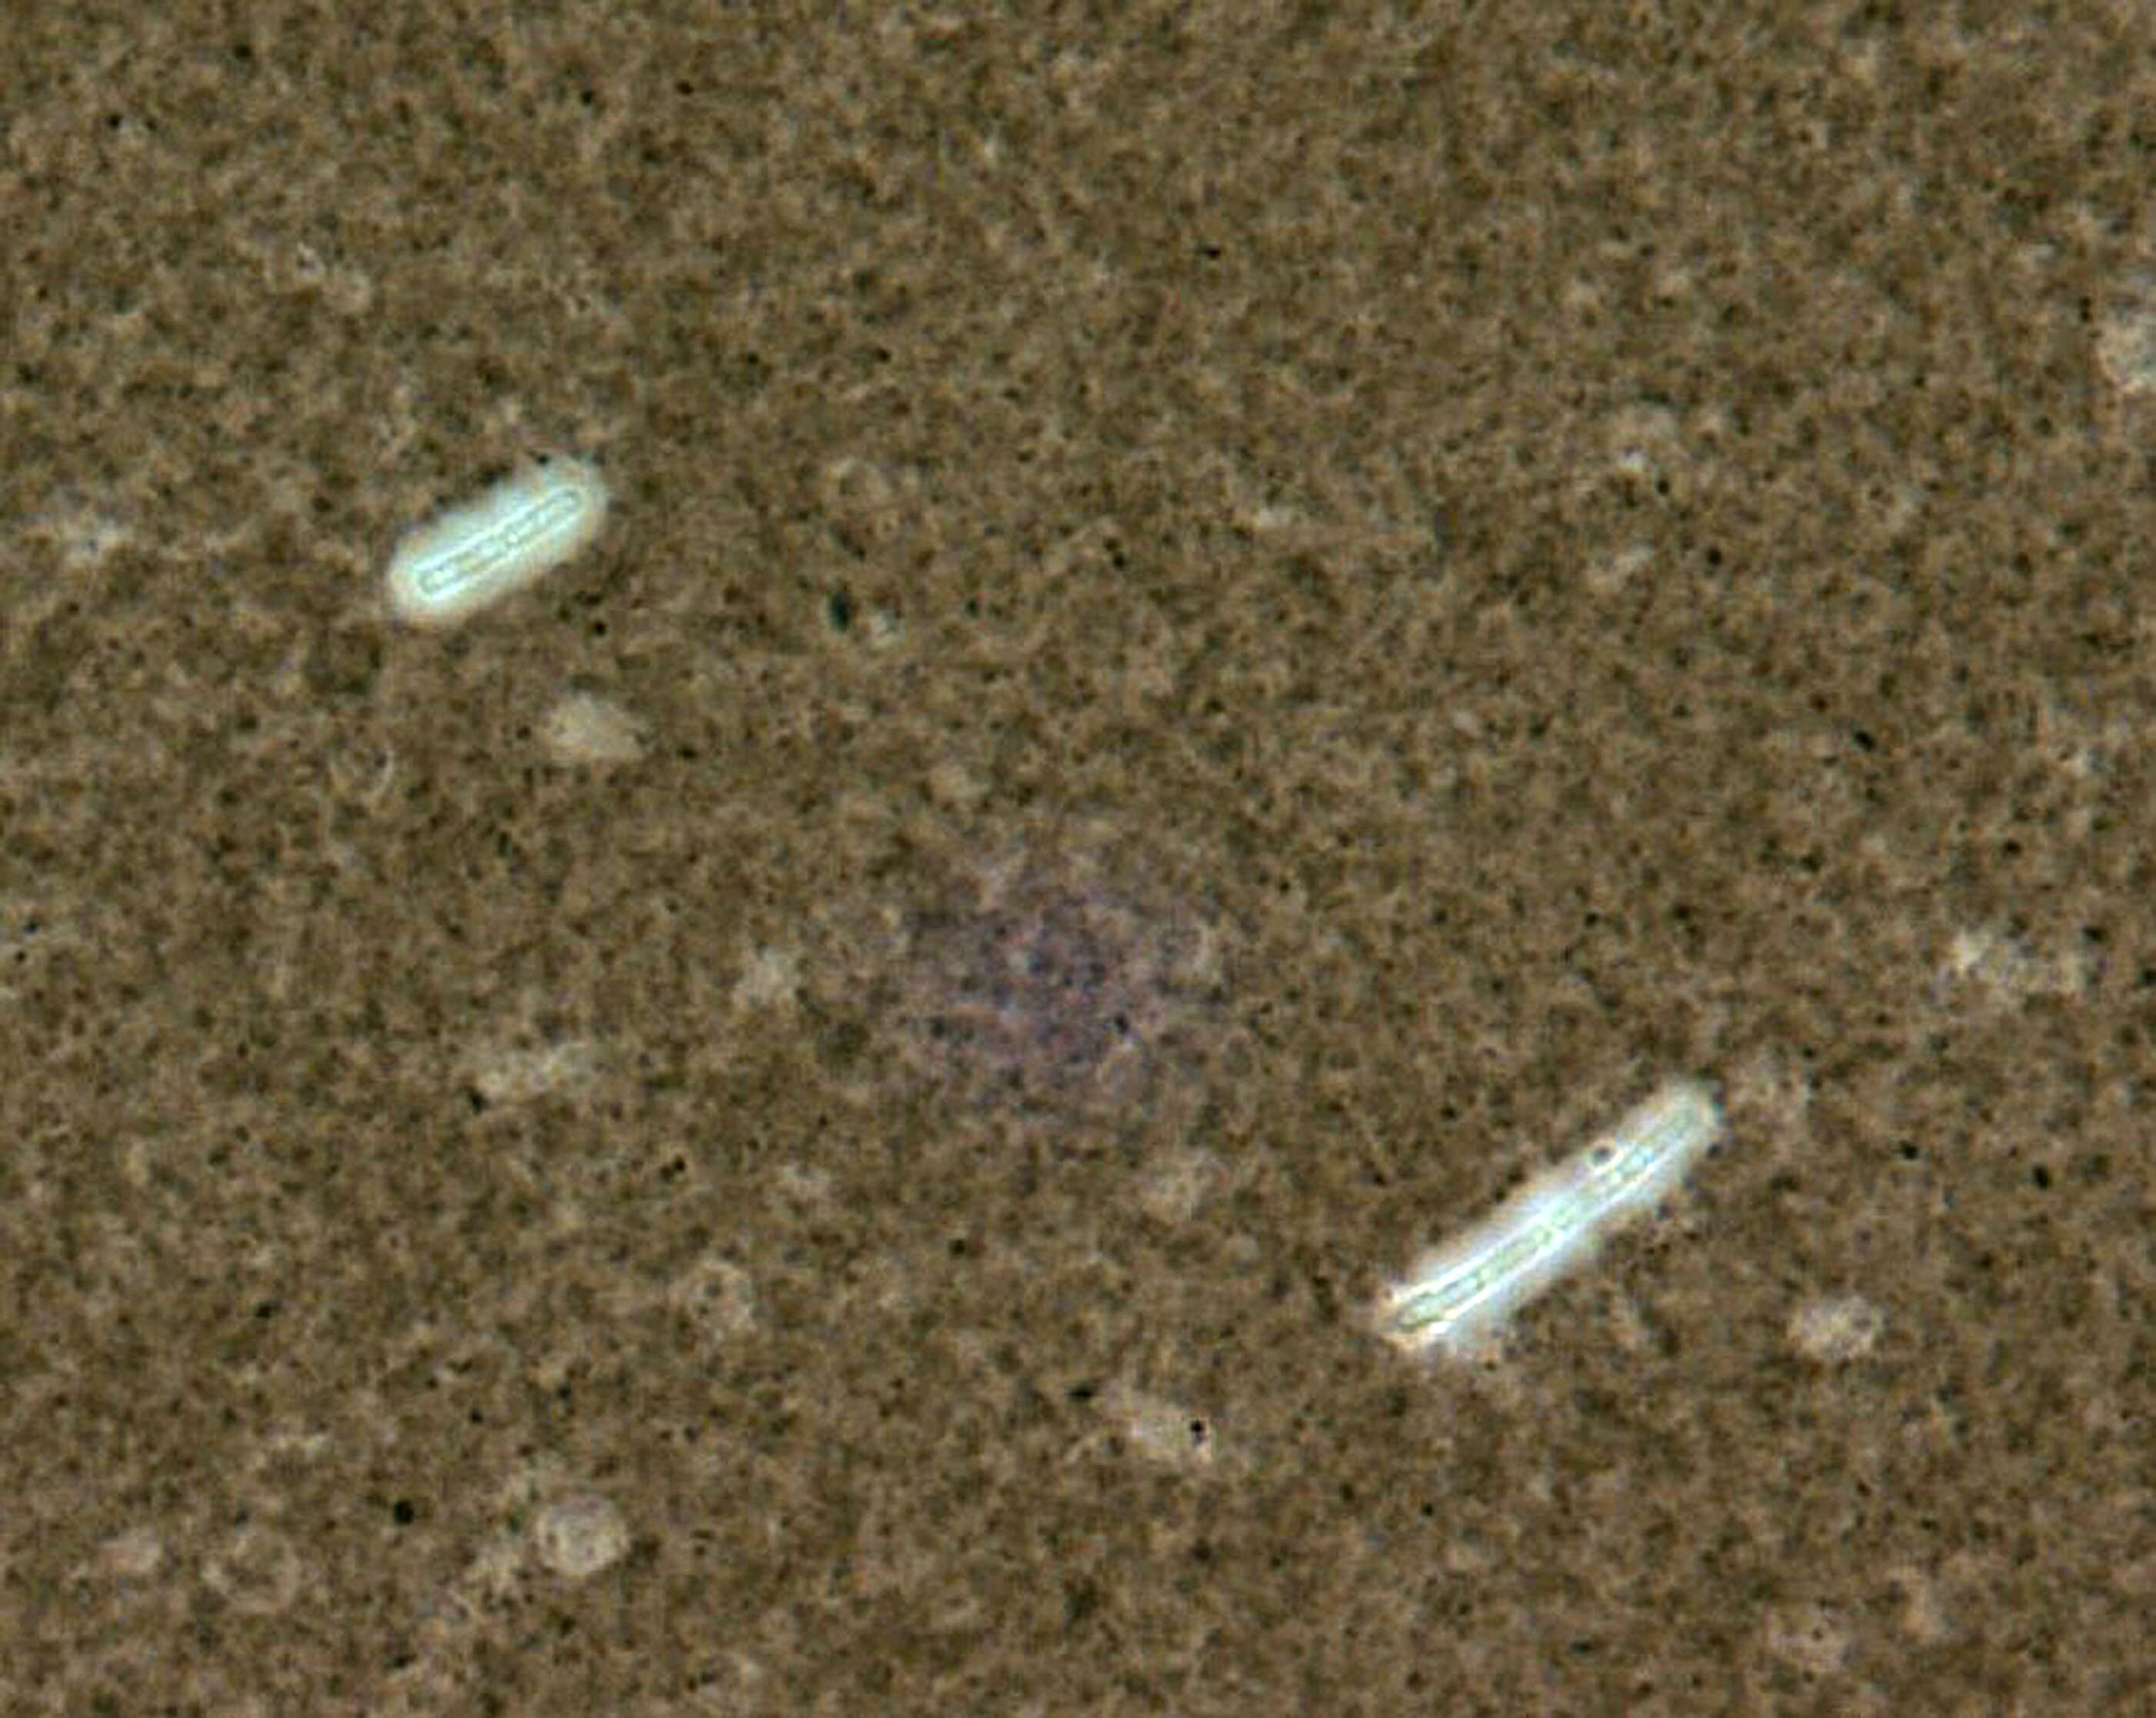 Image de Bacillus anthracis